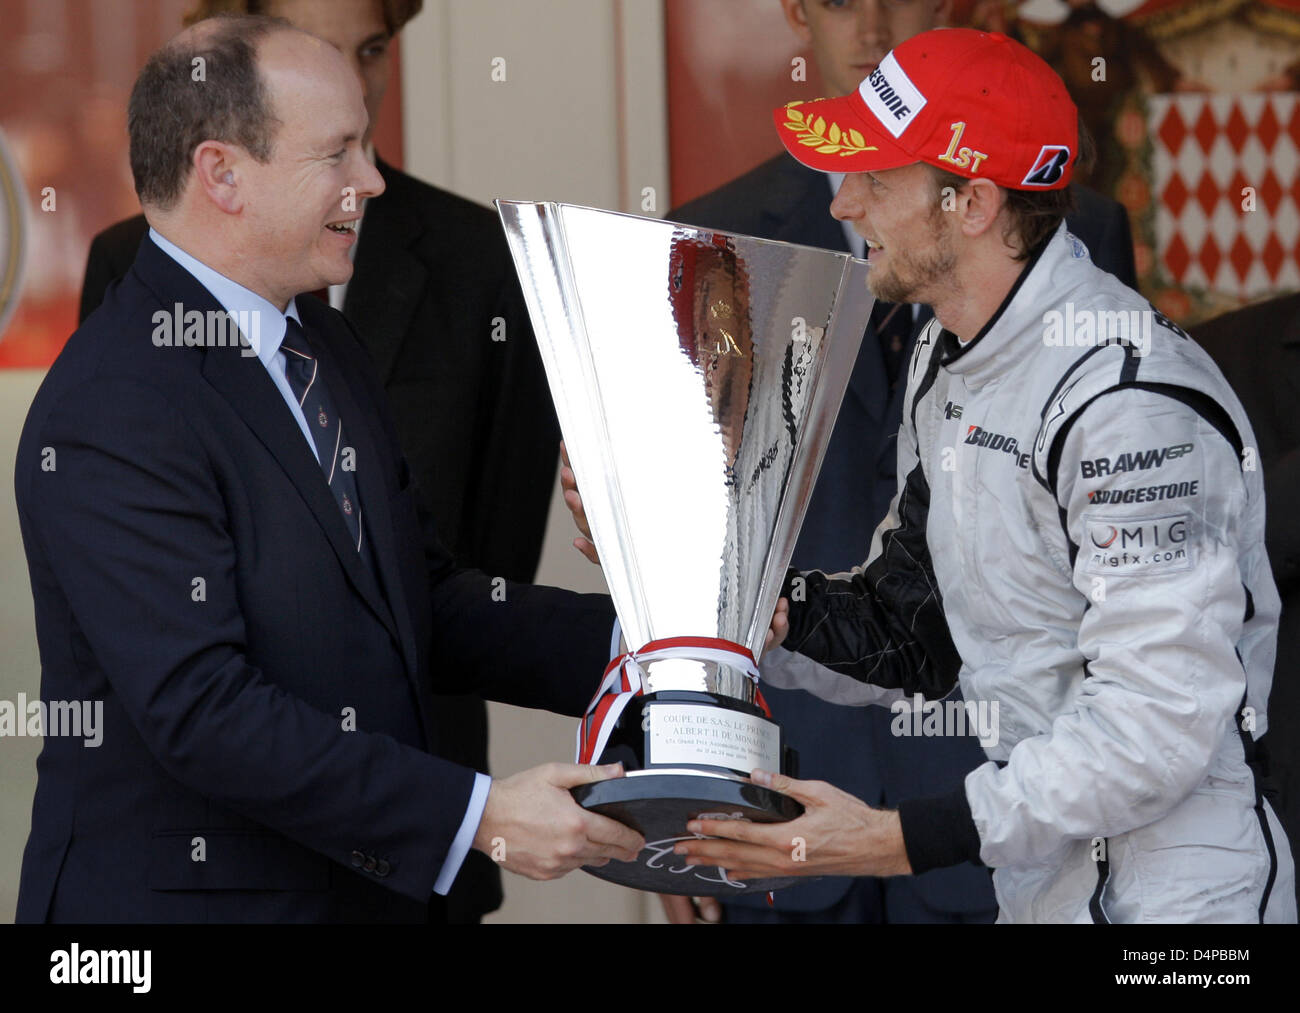 Prince Albert II of Monaco (L) hands the trophy to British Formula One  driver Jenson Button of Brawn GP after the Formula One Grand Prix of Monaco  in Monte Carlo, Monaco, 24